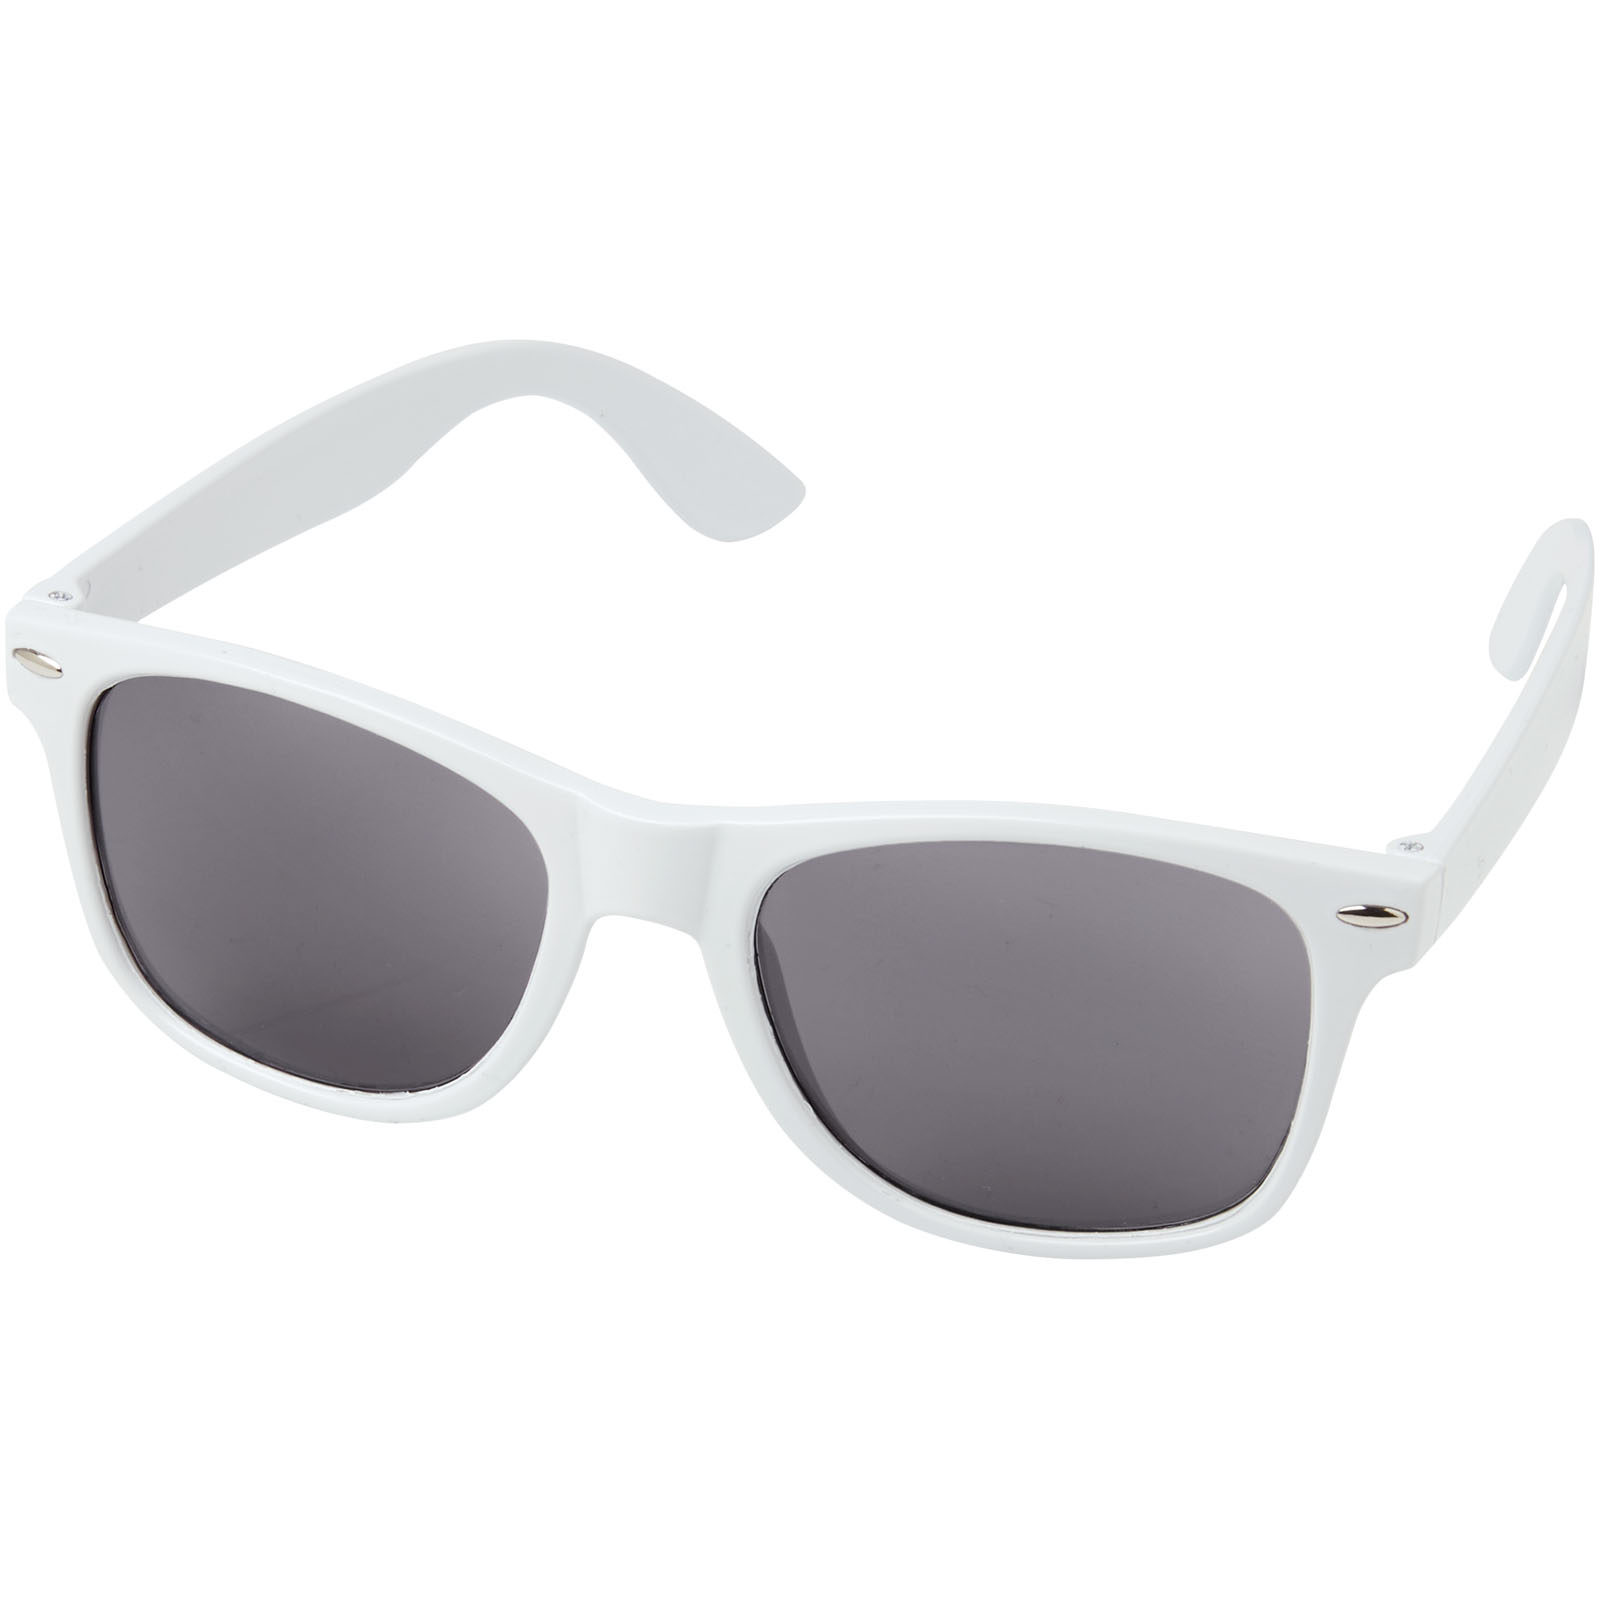 Advertising Sunglasses - Sun Ray rPET sunglasses - 0